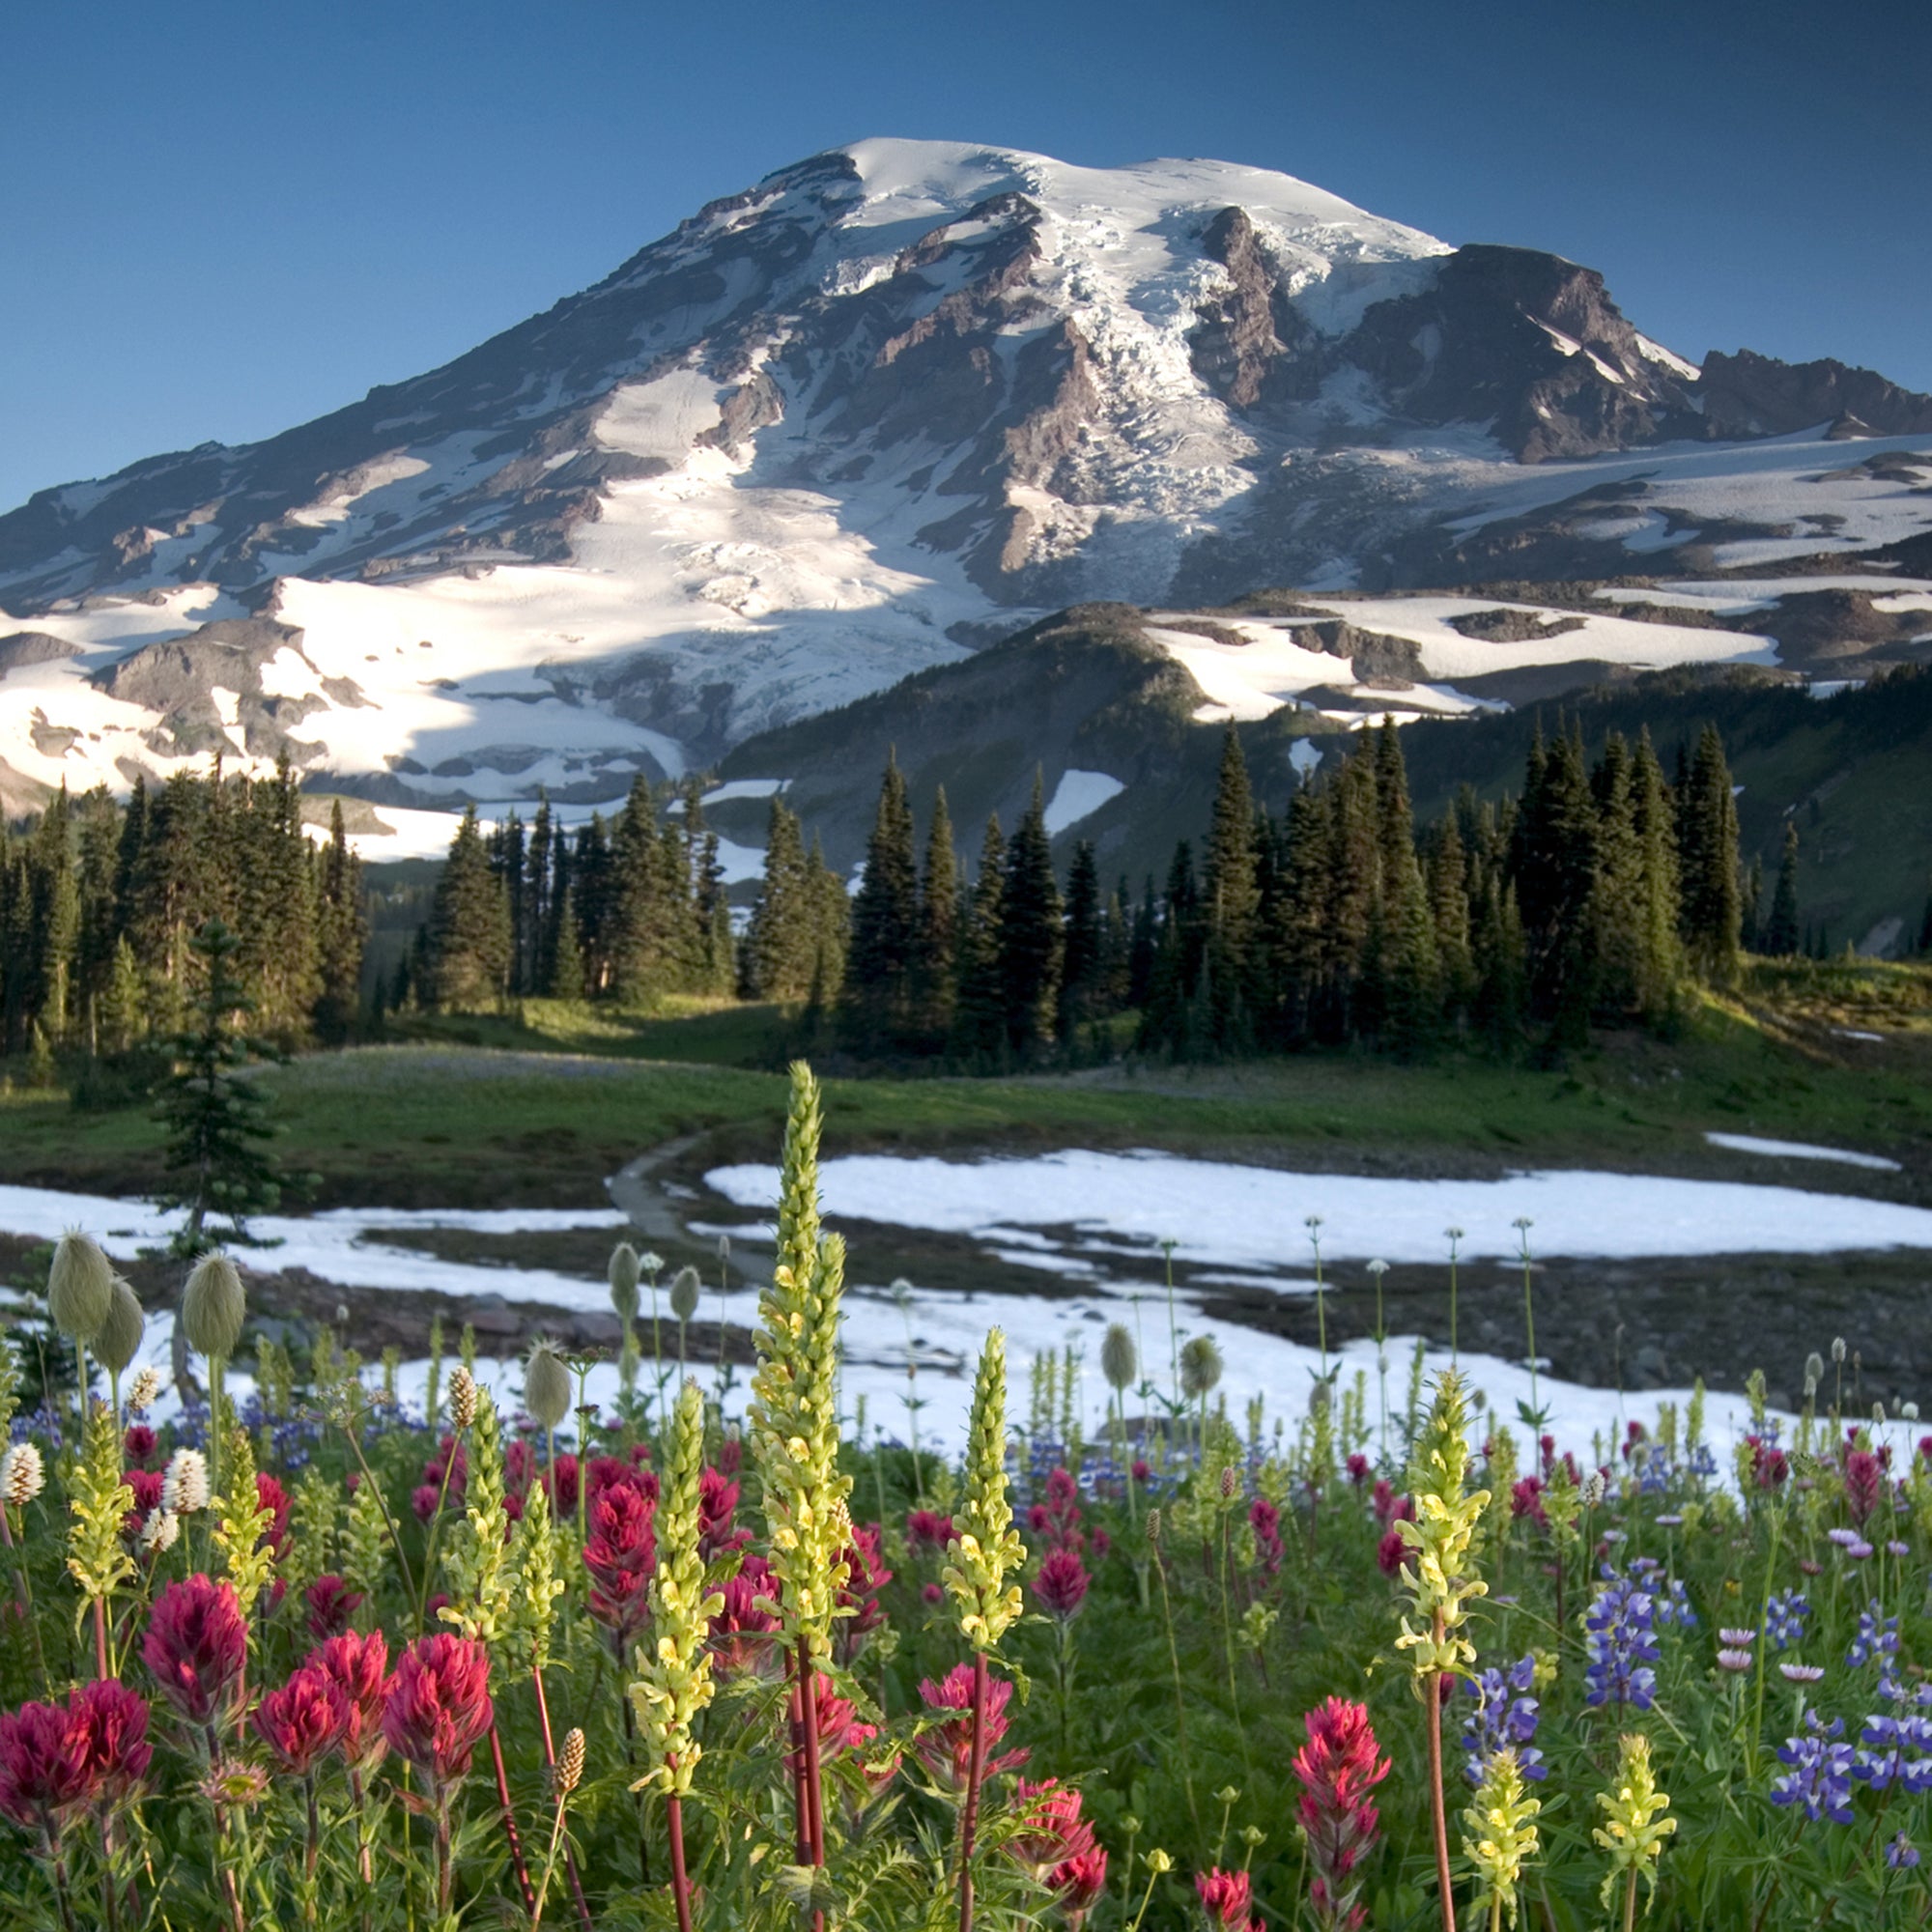 Washington flower and snowy mountain landscape